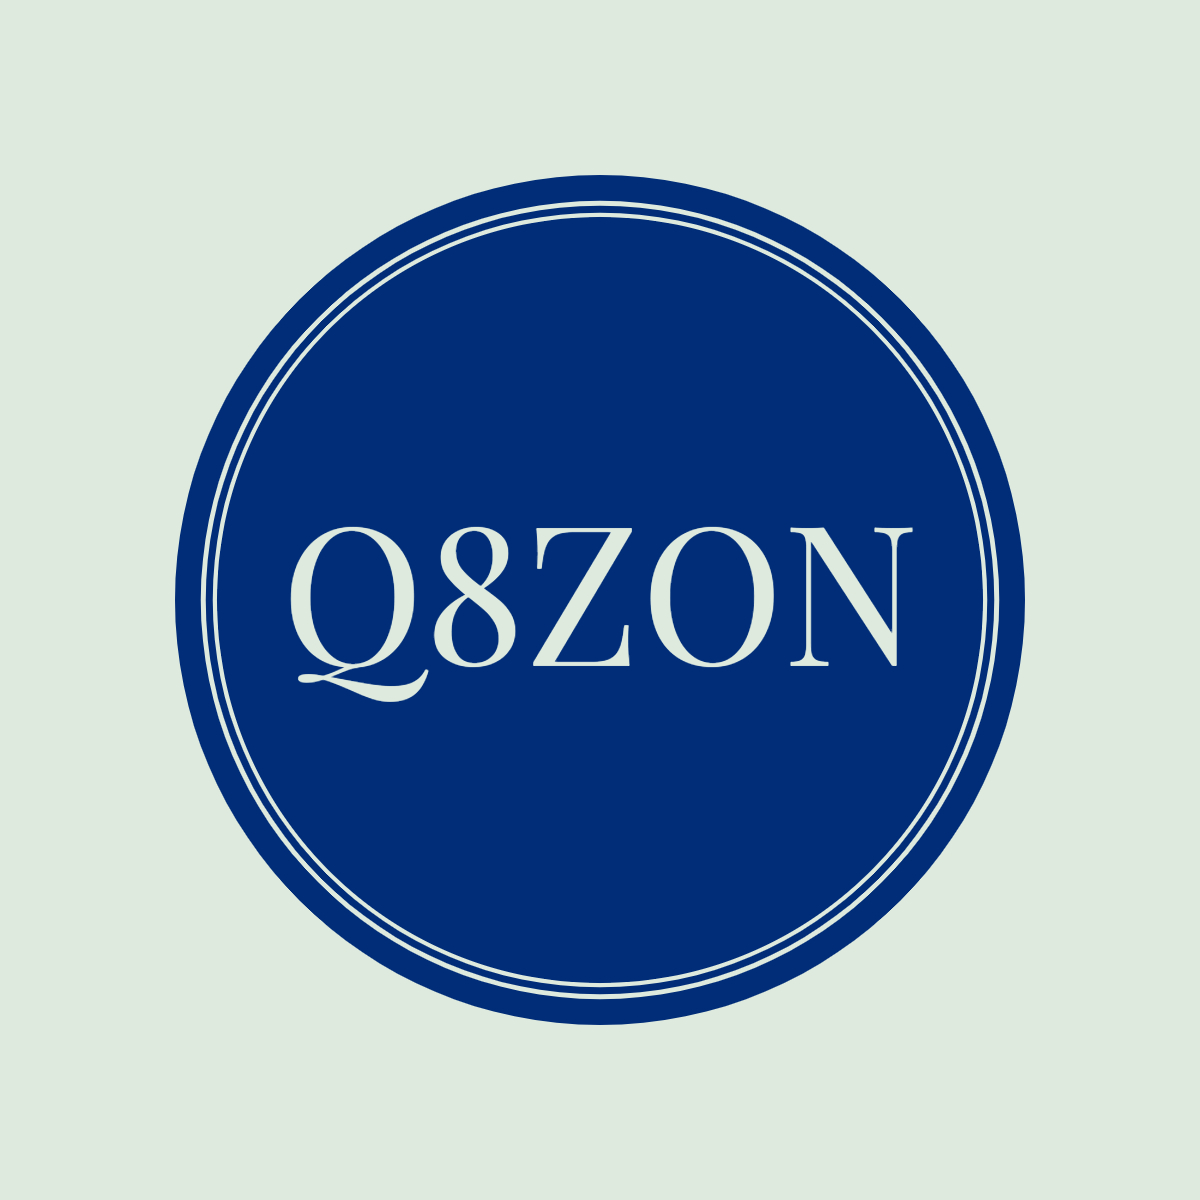 Q8ZON logos 1